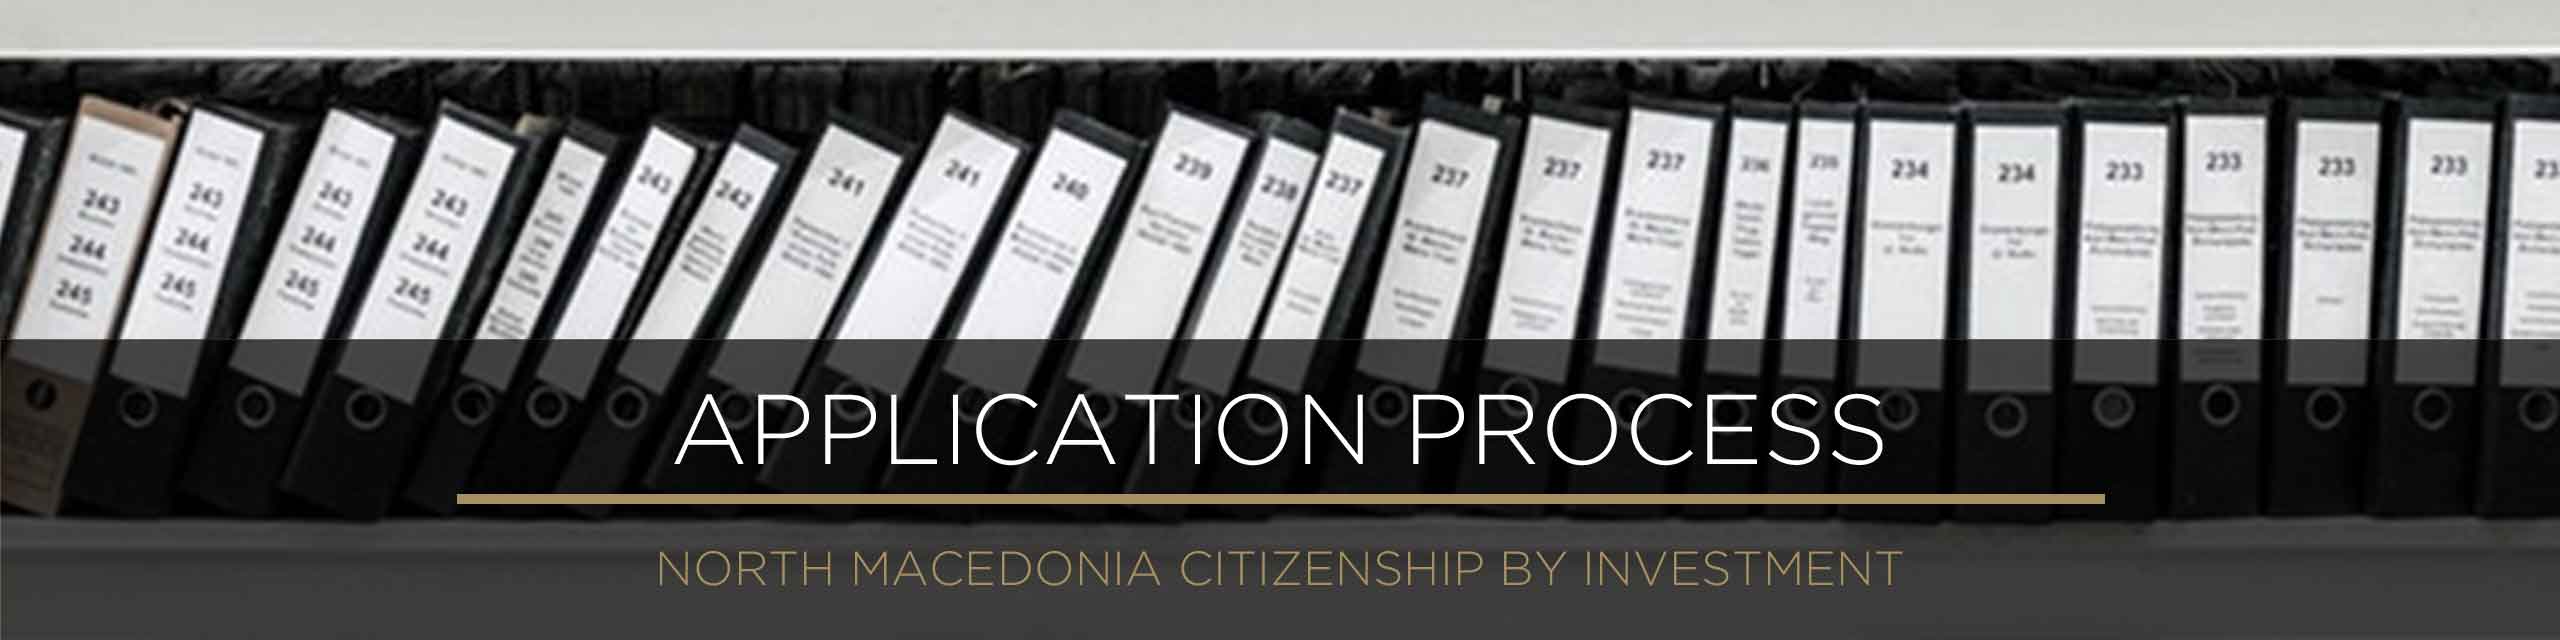 Application process to get North Macedonian Citizenship